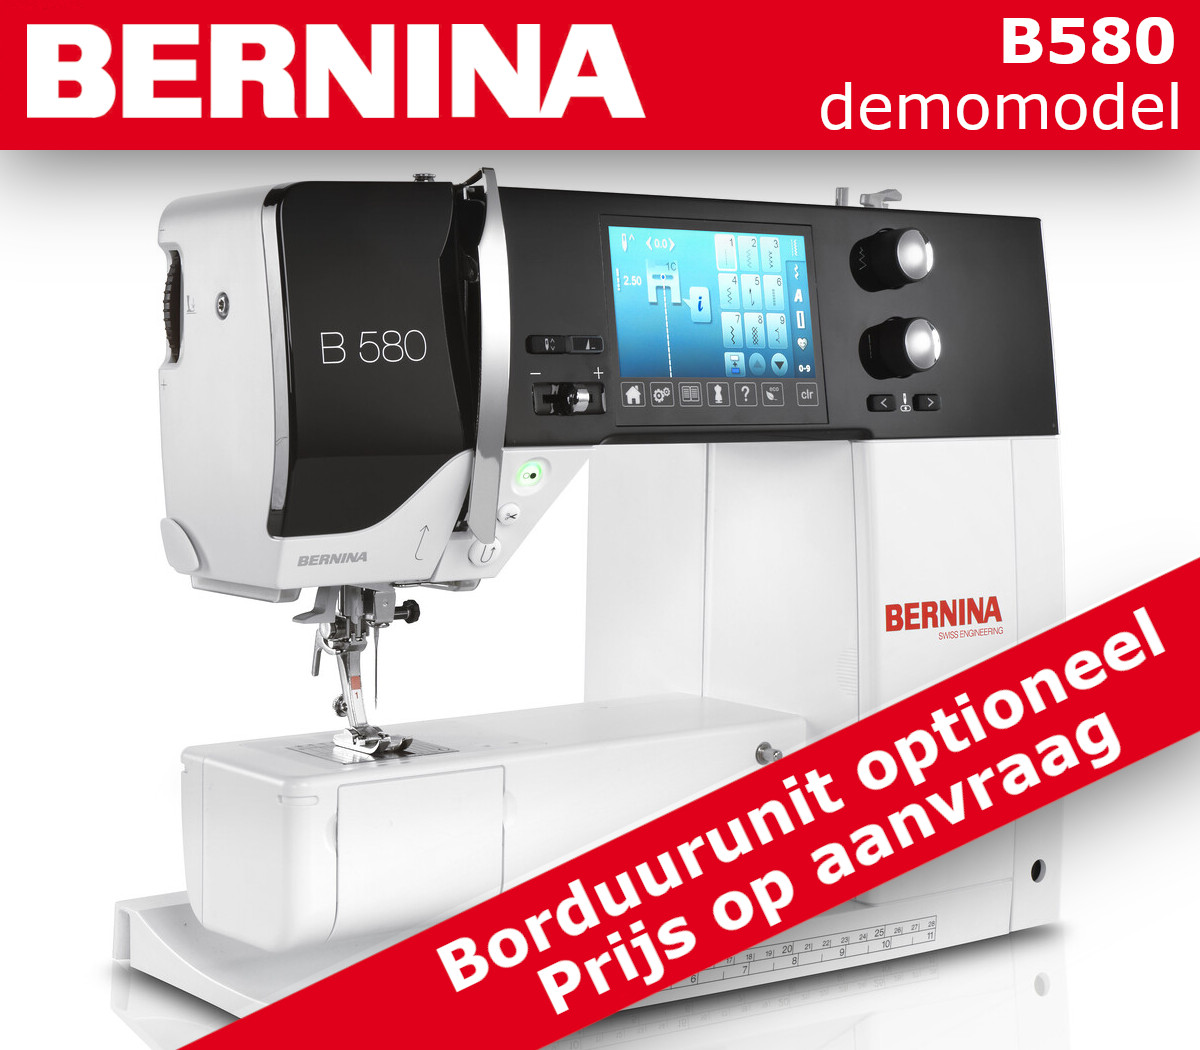 Bernina B580 demomodel - Borduurunit optioneel - Prijs op aanvraag